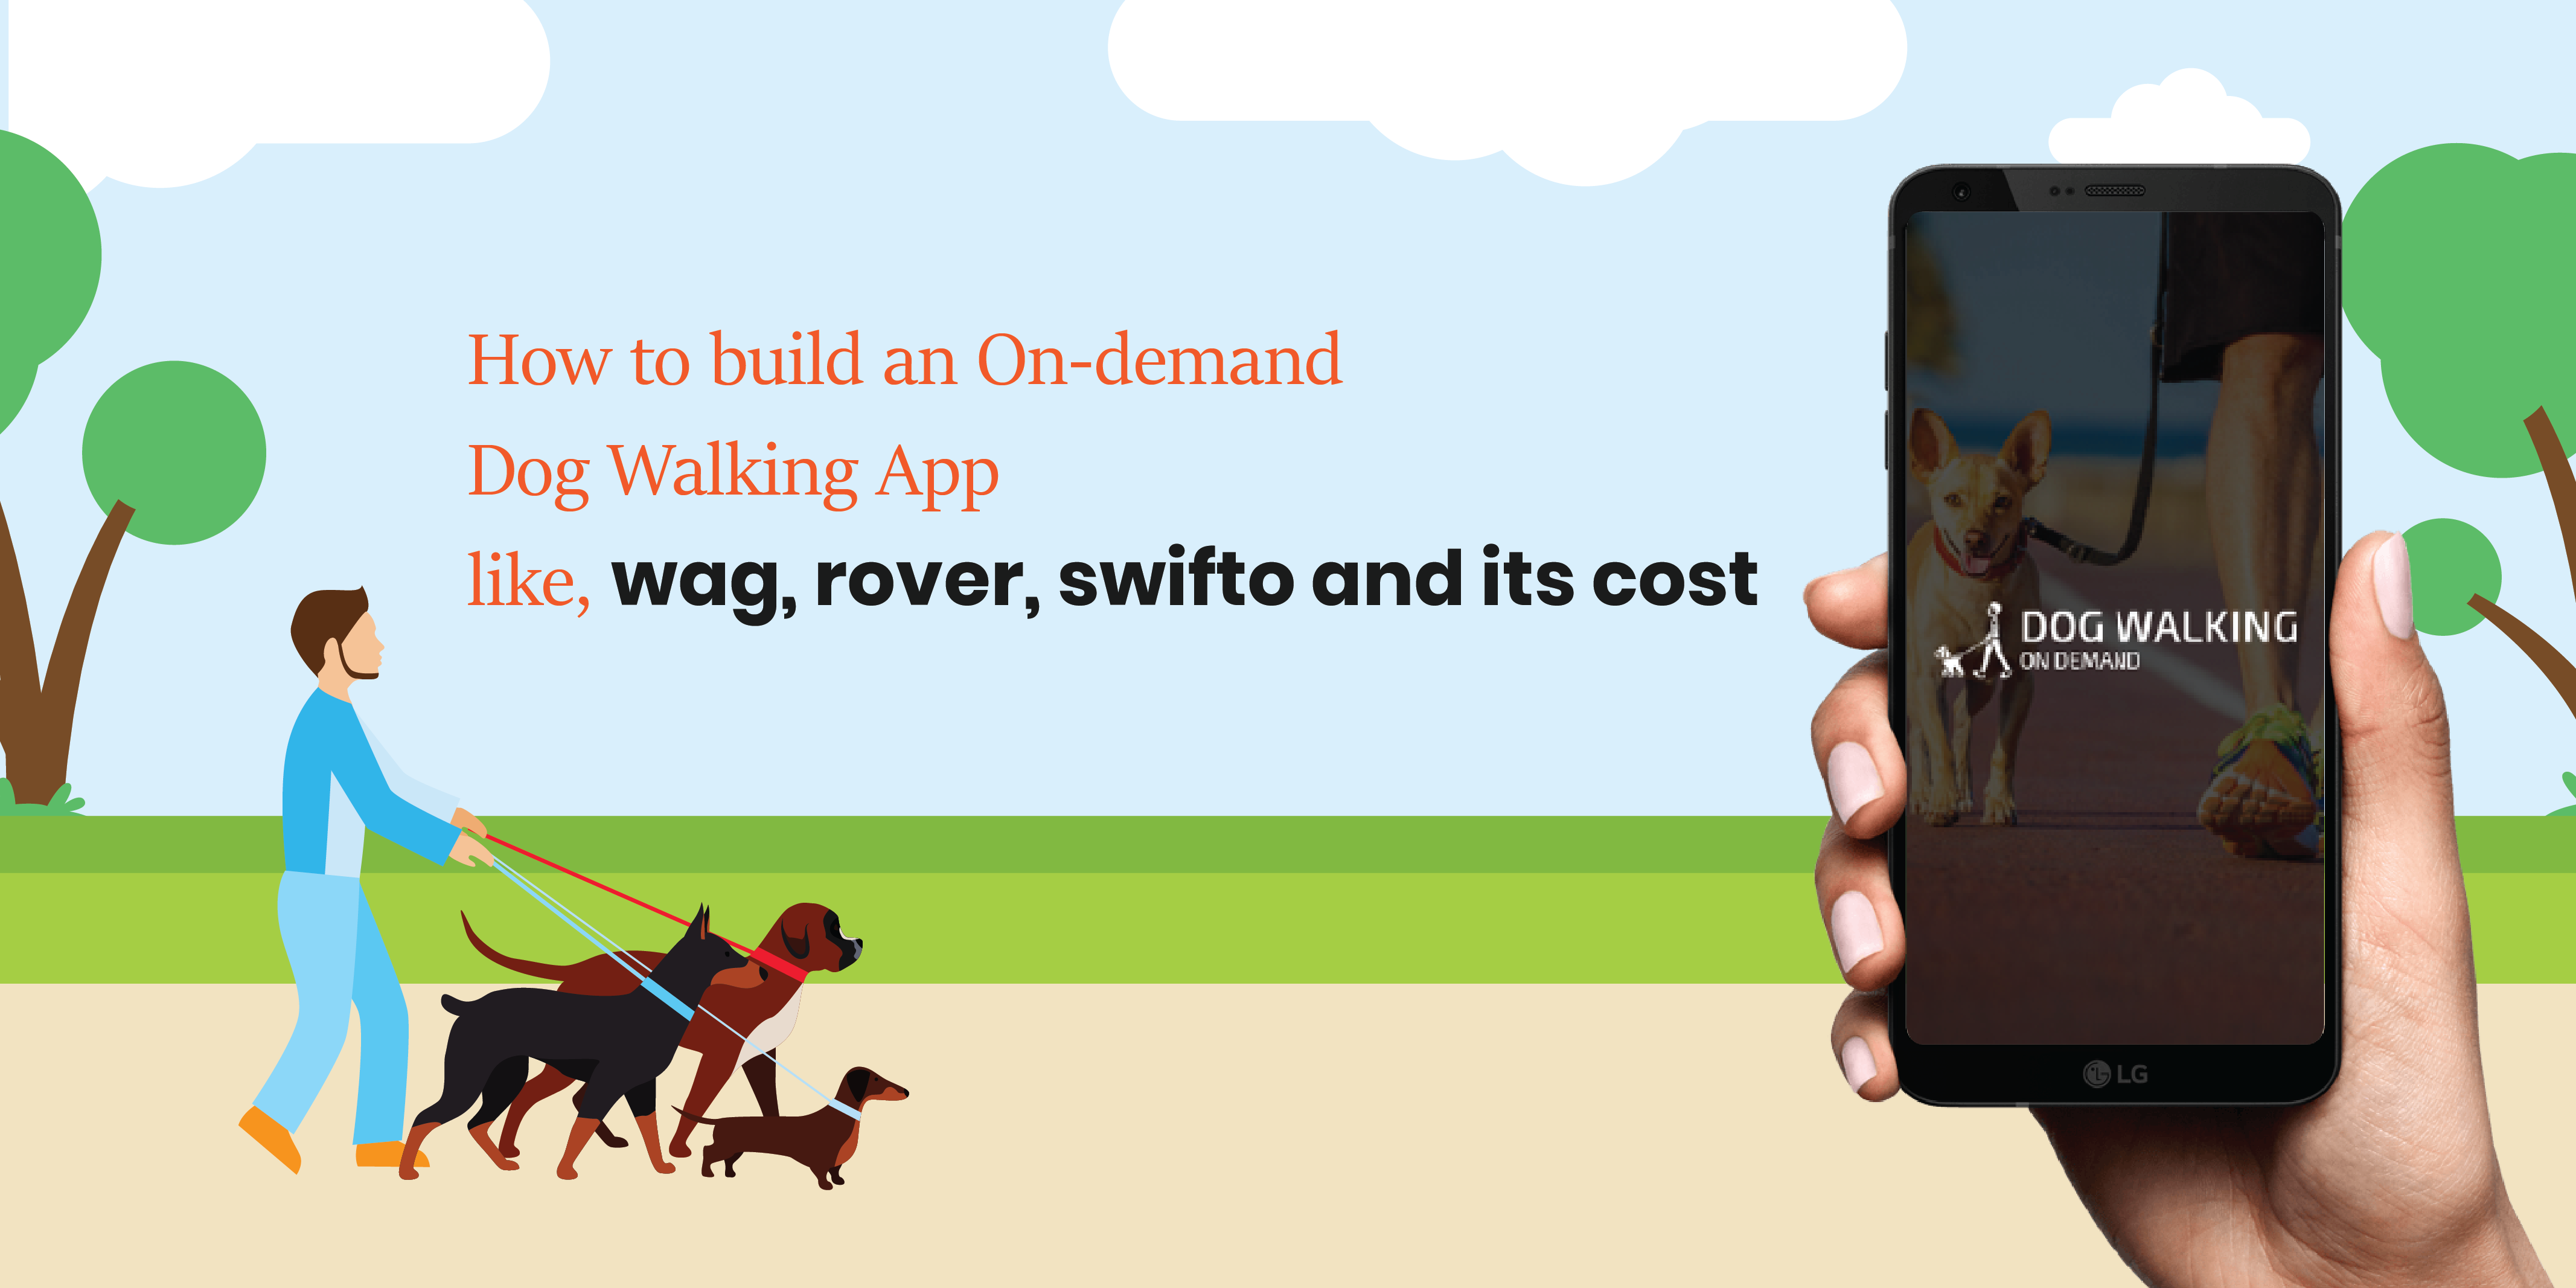 rover walker app